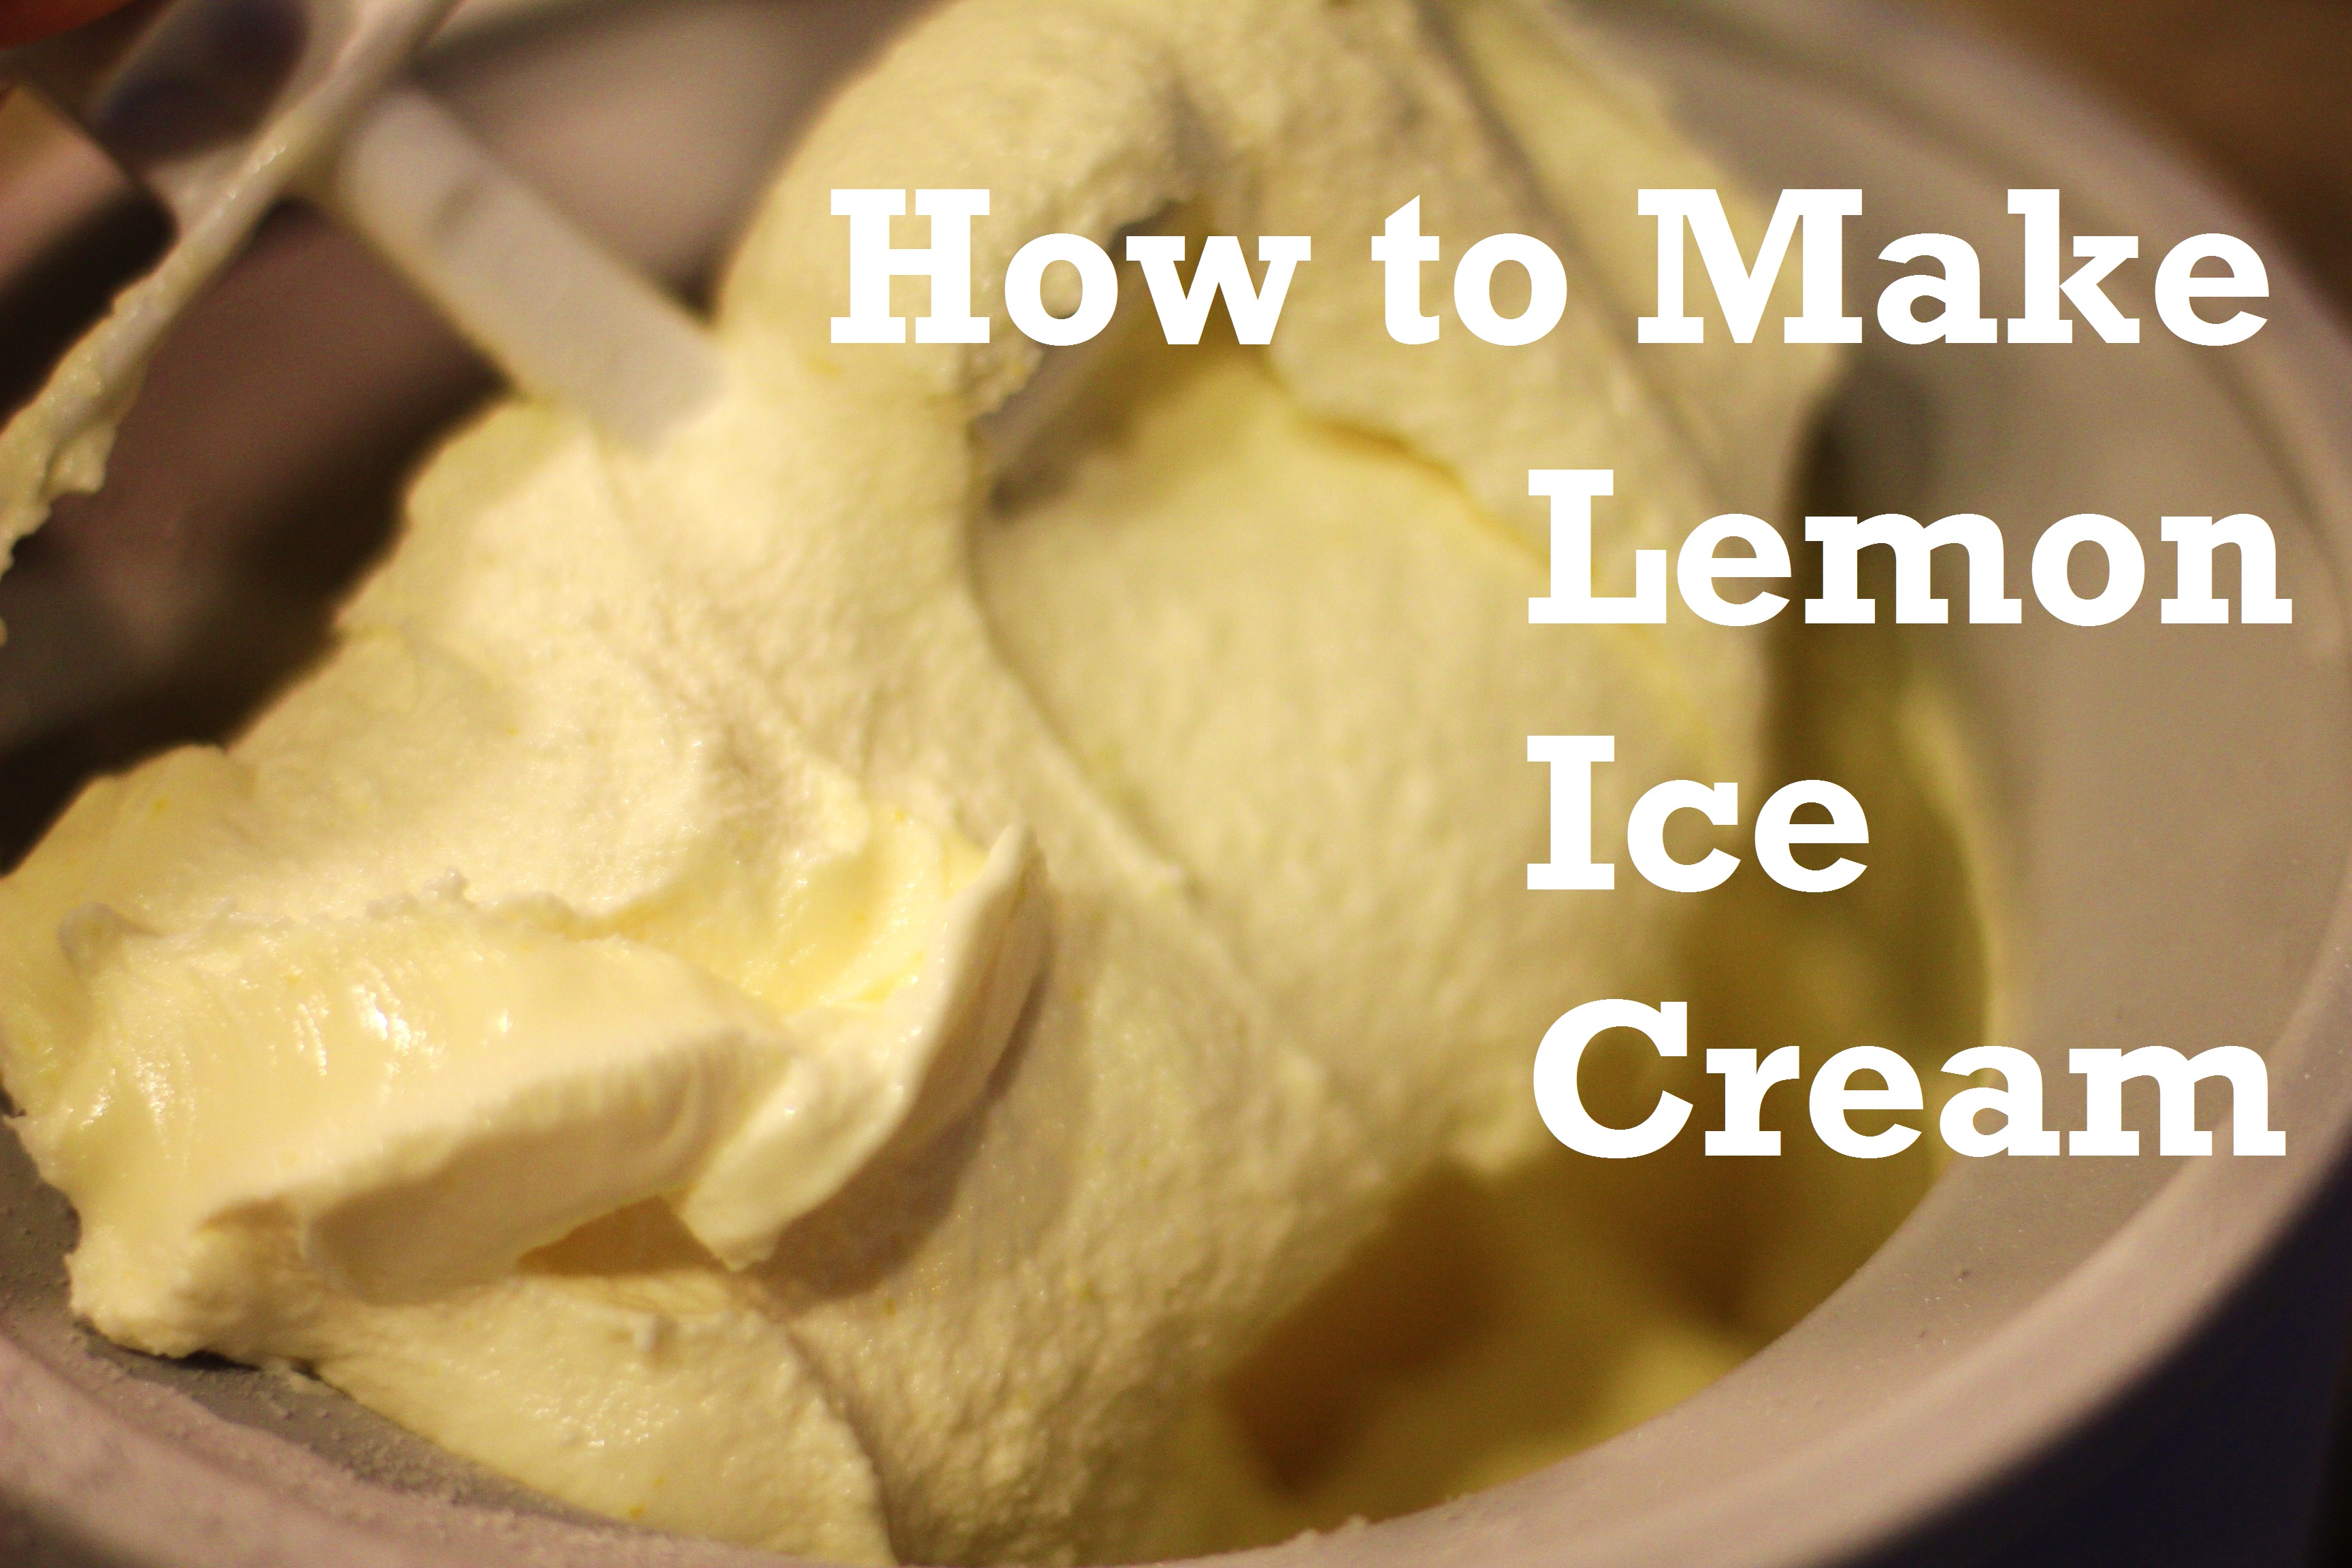 Recipe: How to Make Lemon Ice Cream